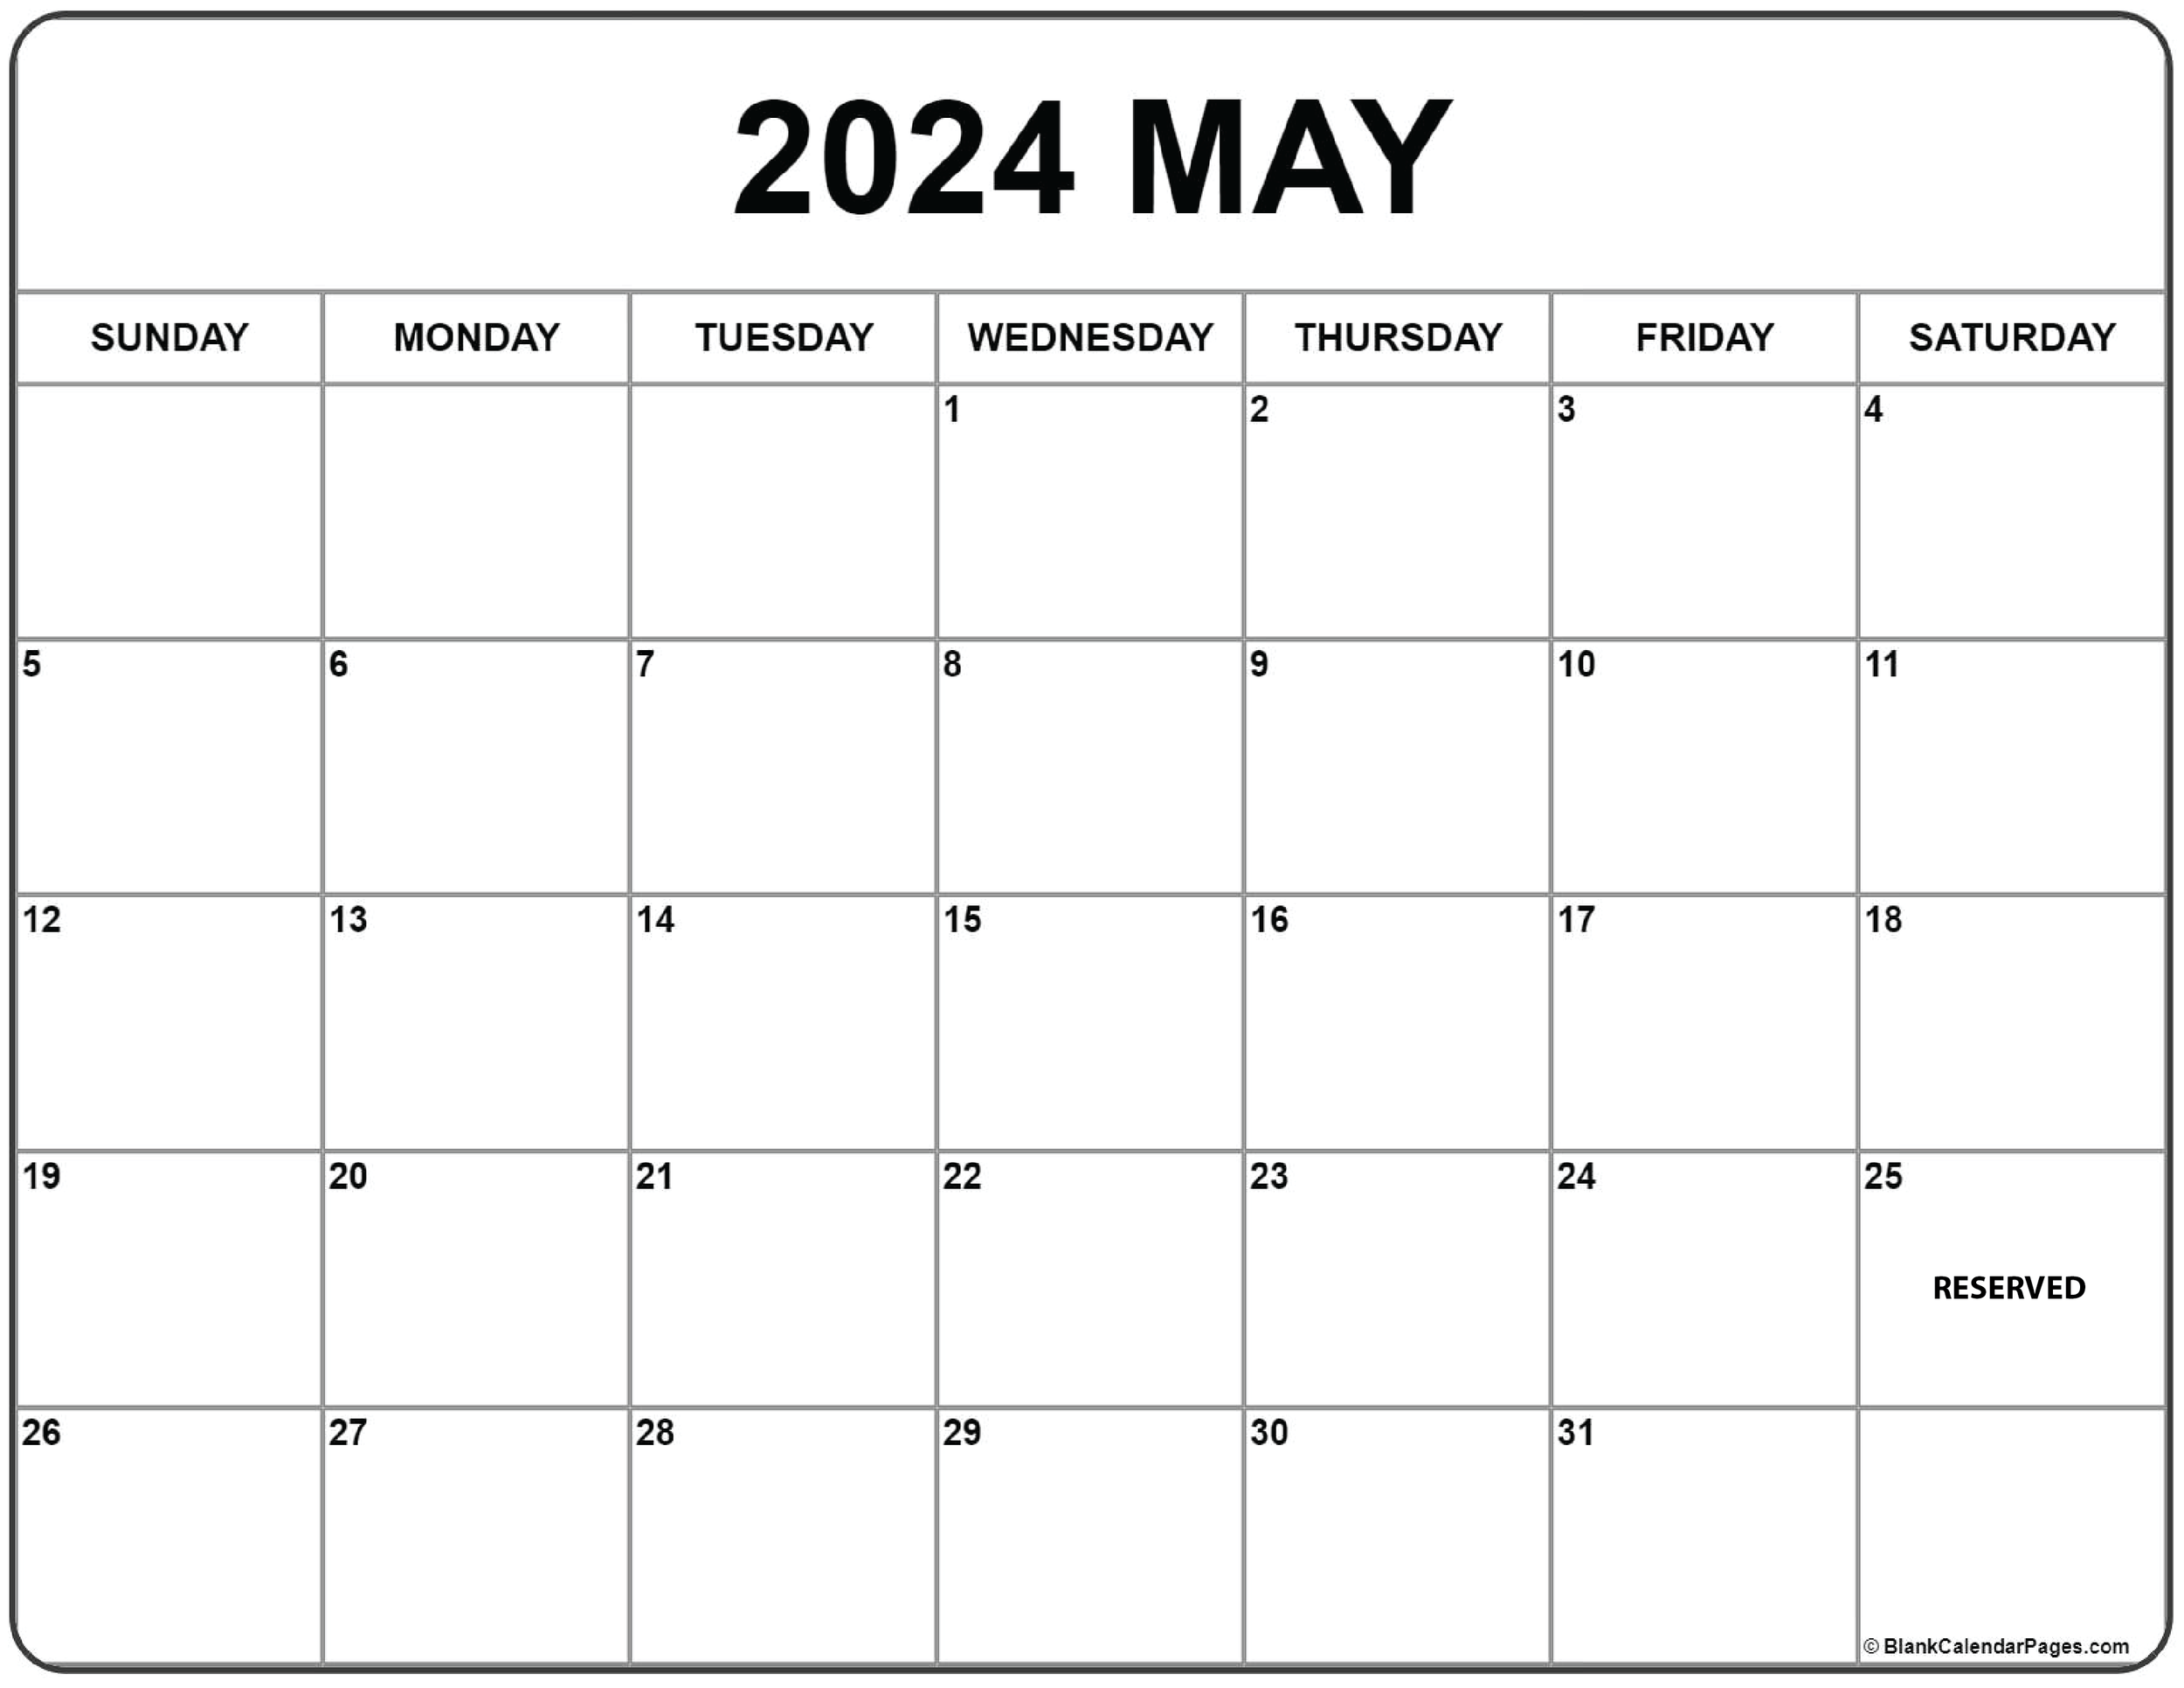 SUC Event Calendar_2024-01.png